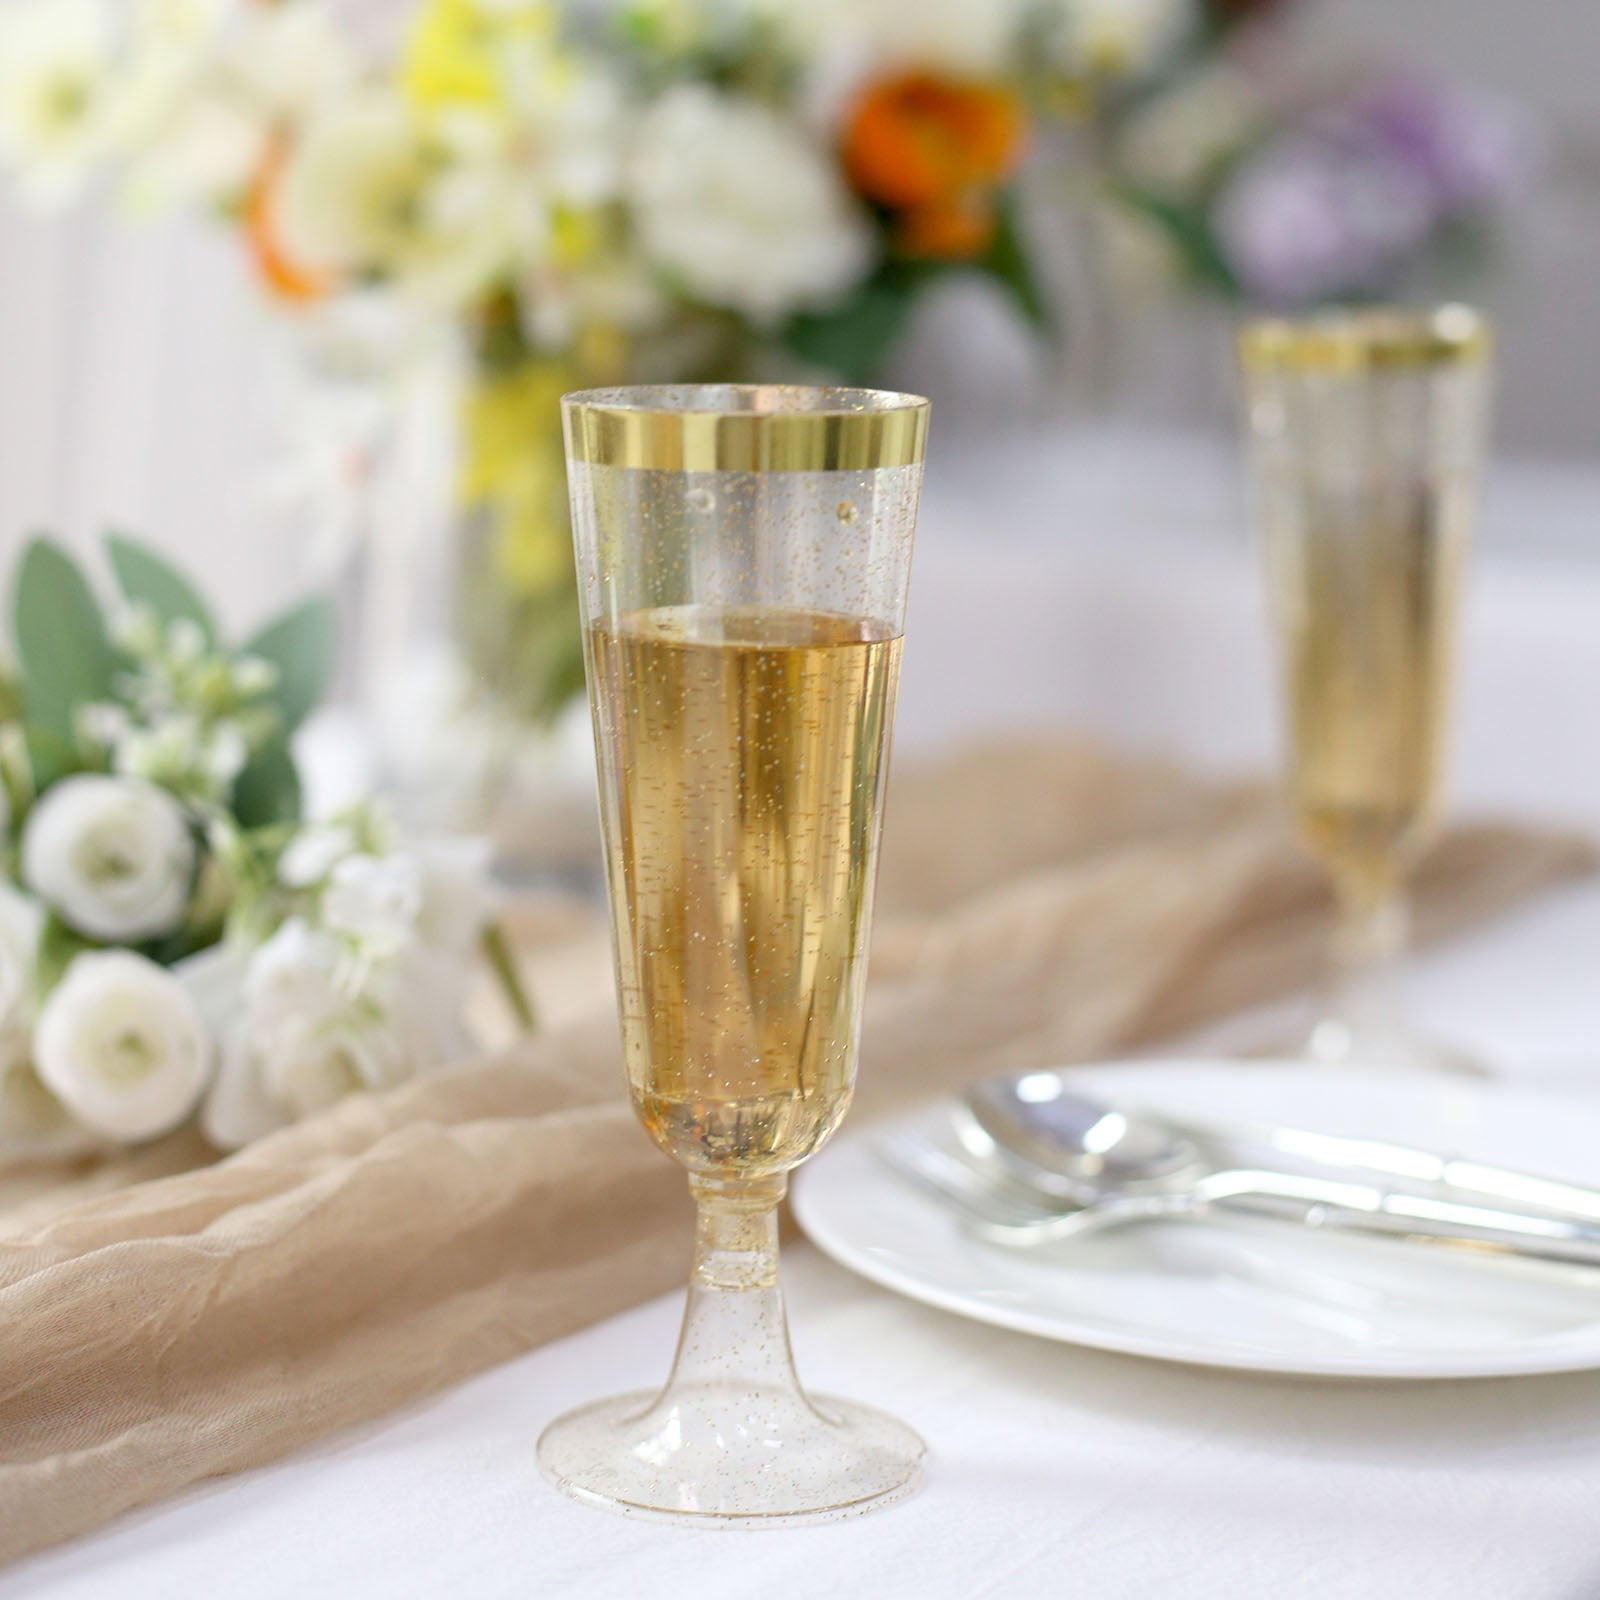 Razzle Dazzle Champagne Flutes with Gold Accents, Set of 6* – Abigails